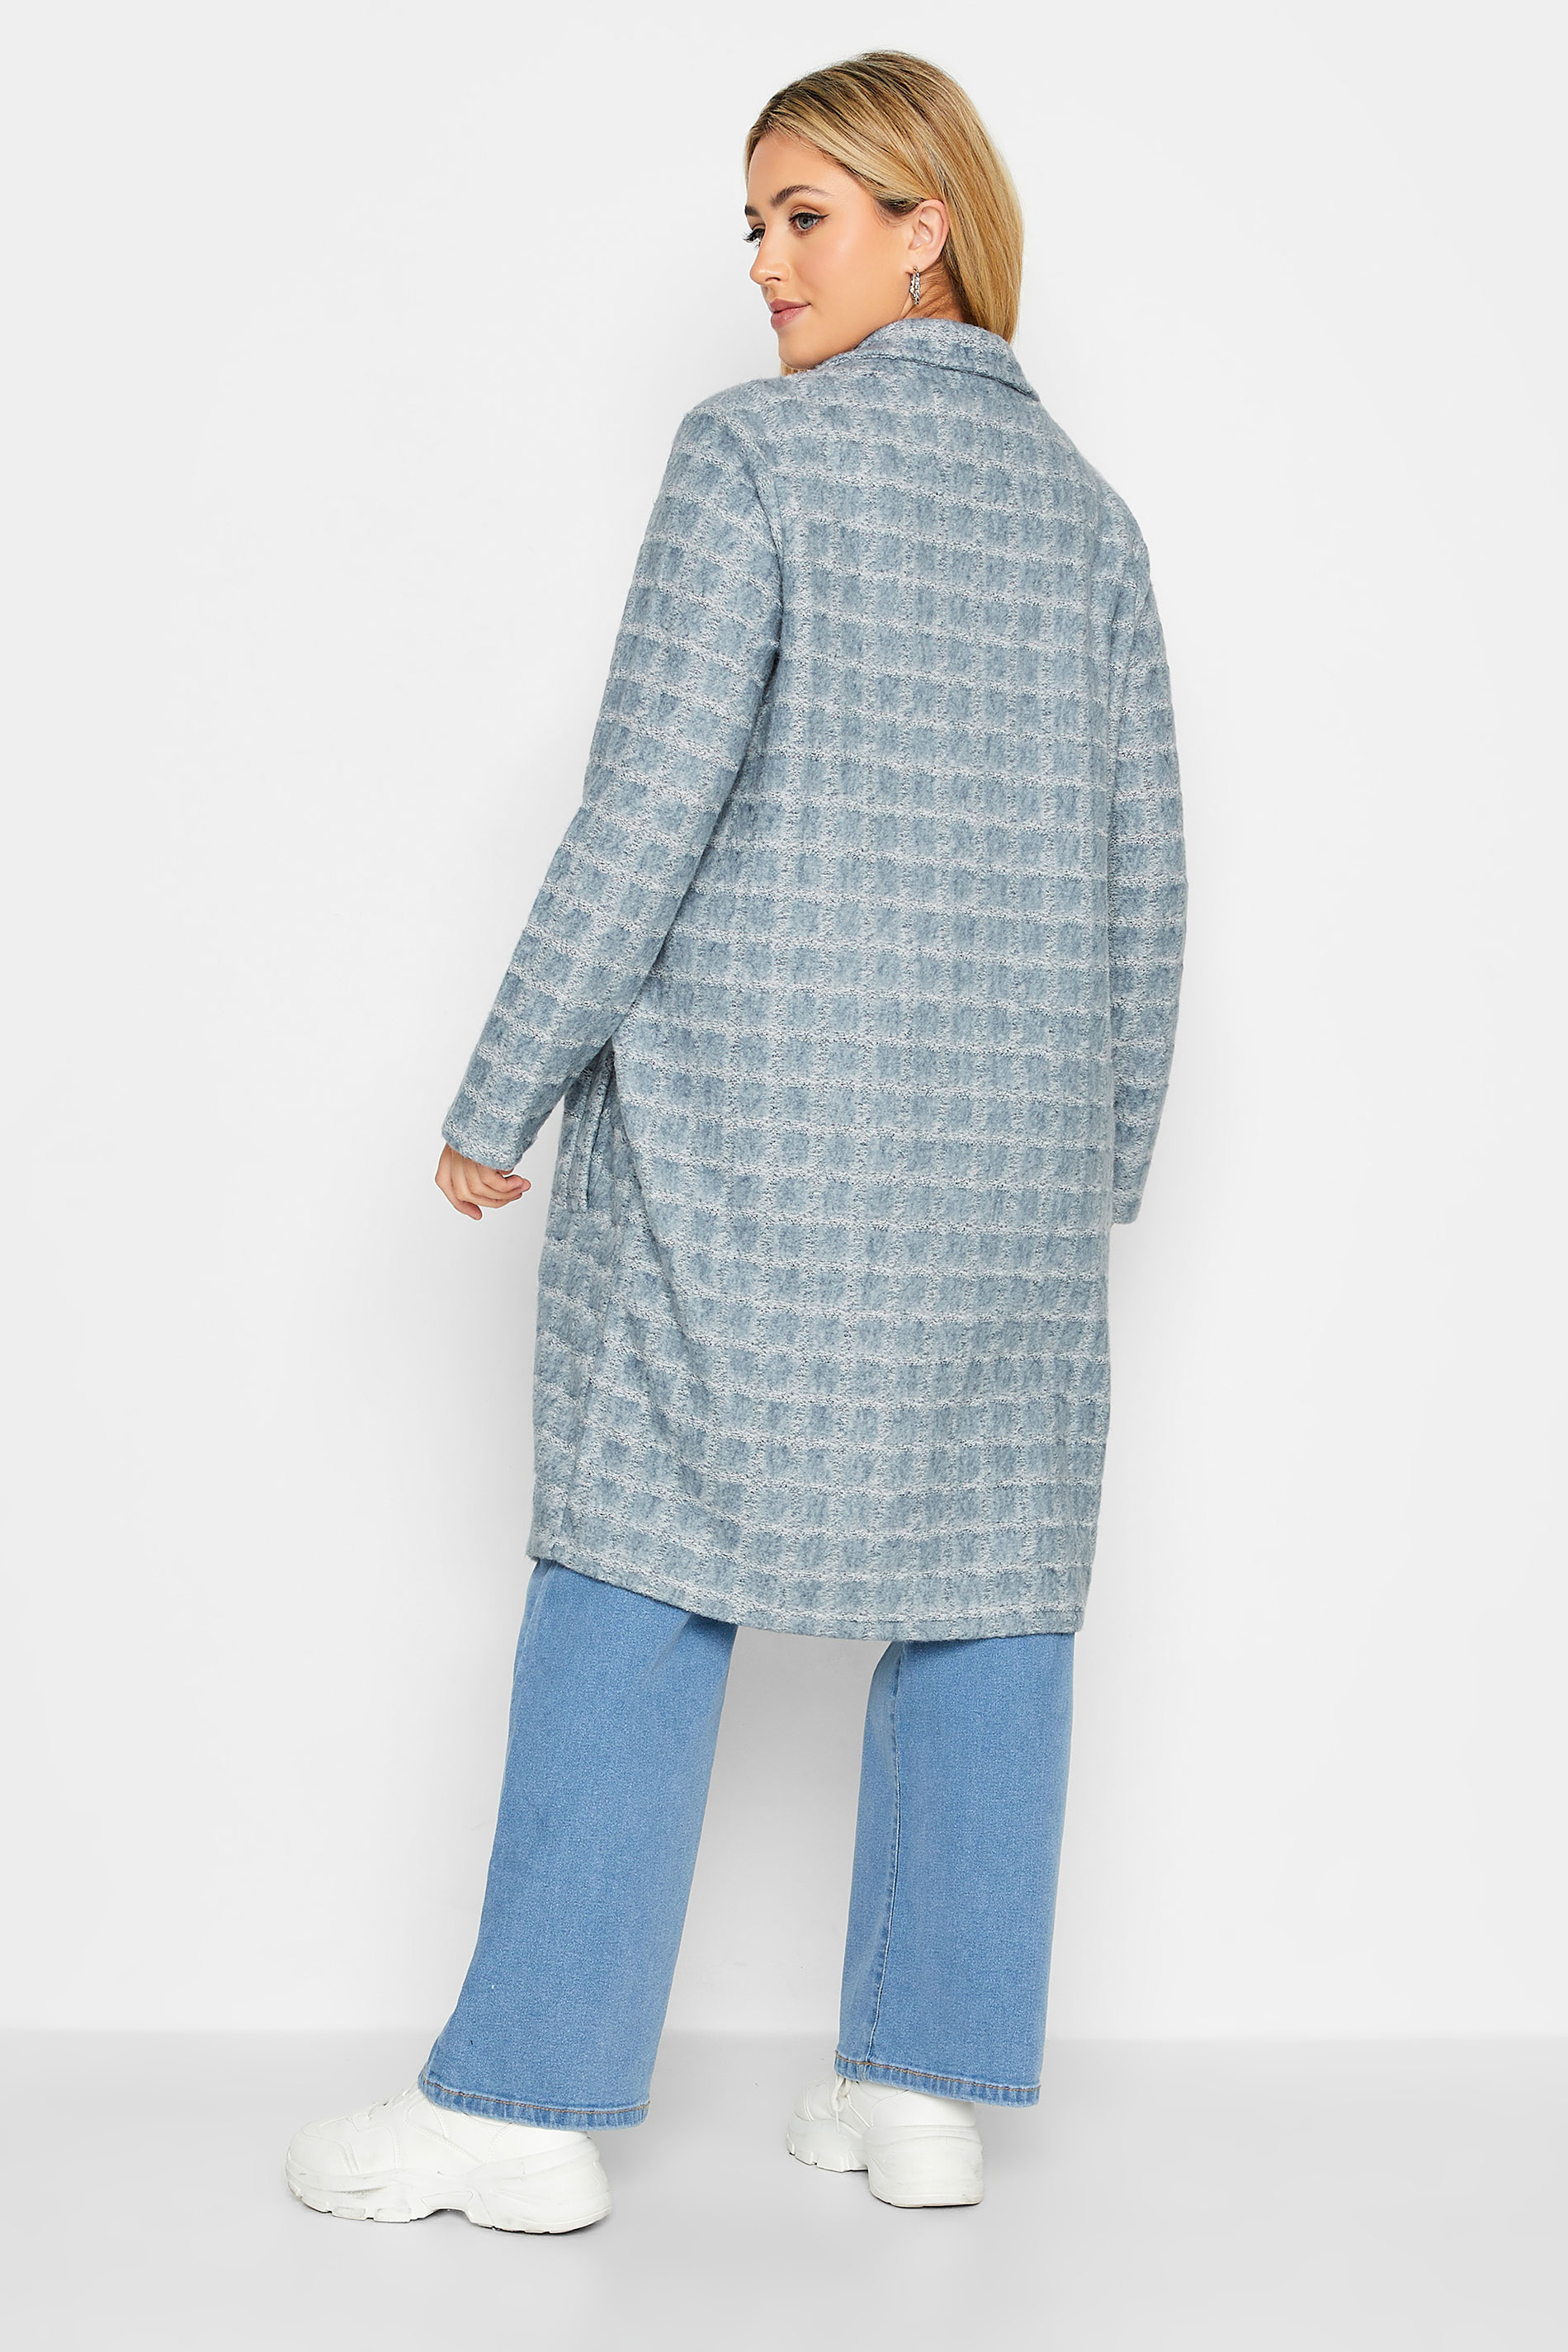 YOURS LUXURY Plus Size Blue Geometric Print Faux Fur Jacket | Yours Clothing 3